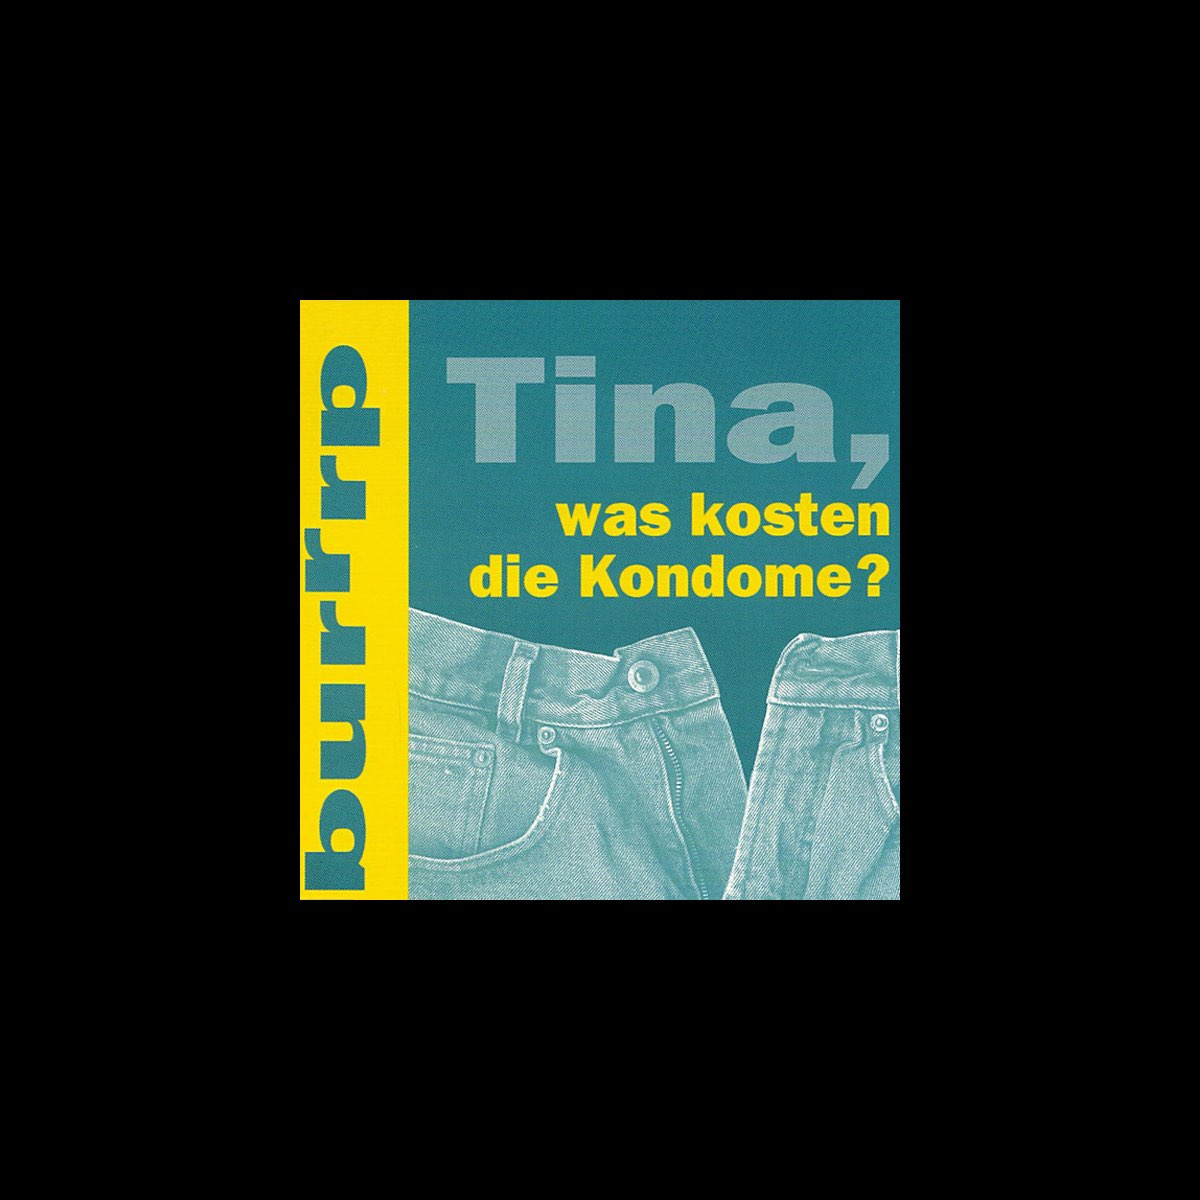 Tina, was kosten die Kondome? - EP by Burrrp on Apple Music